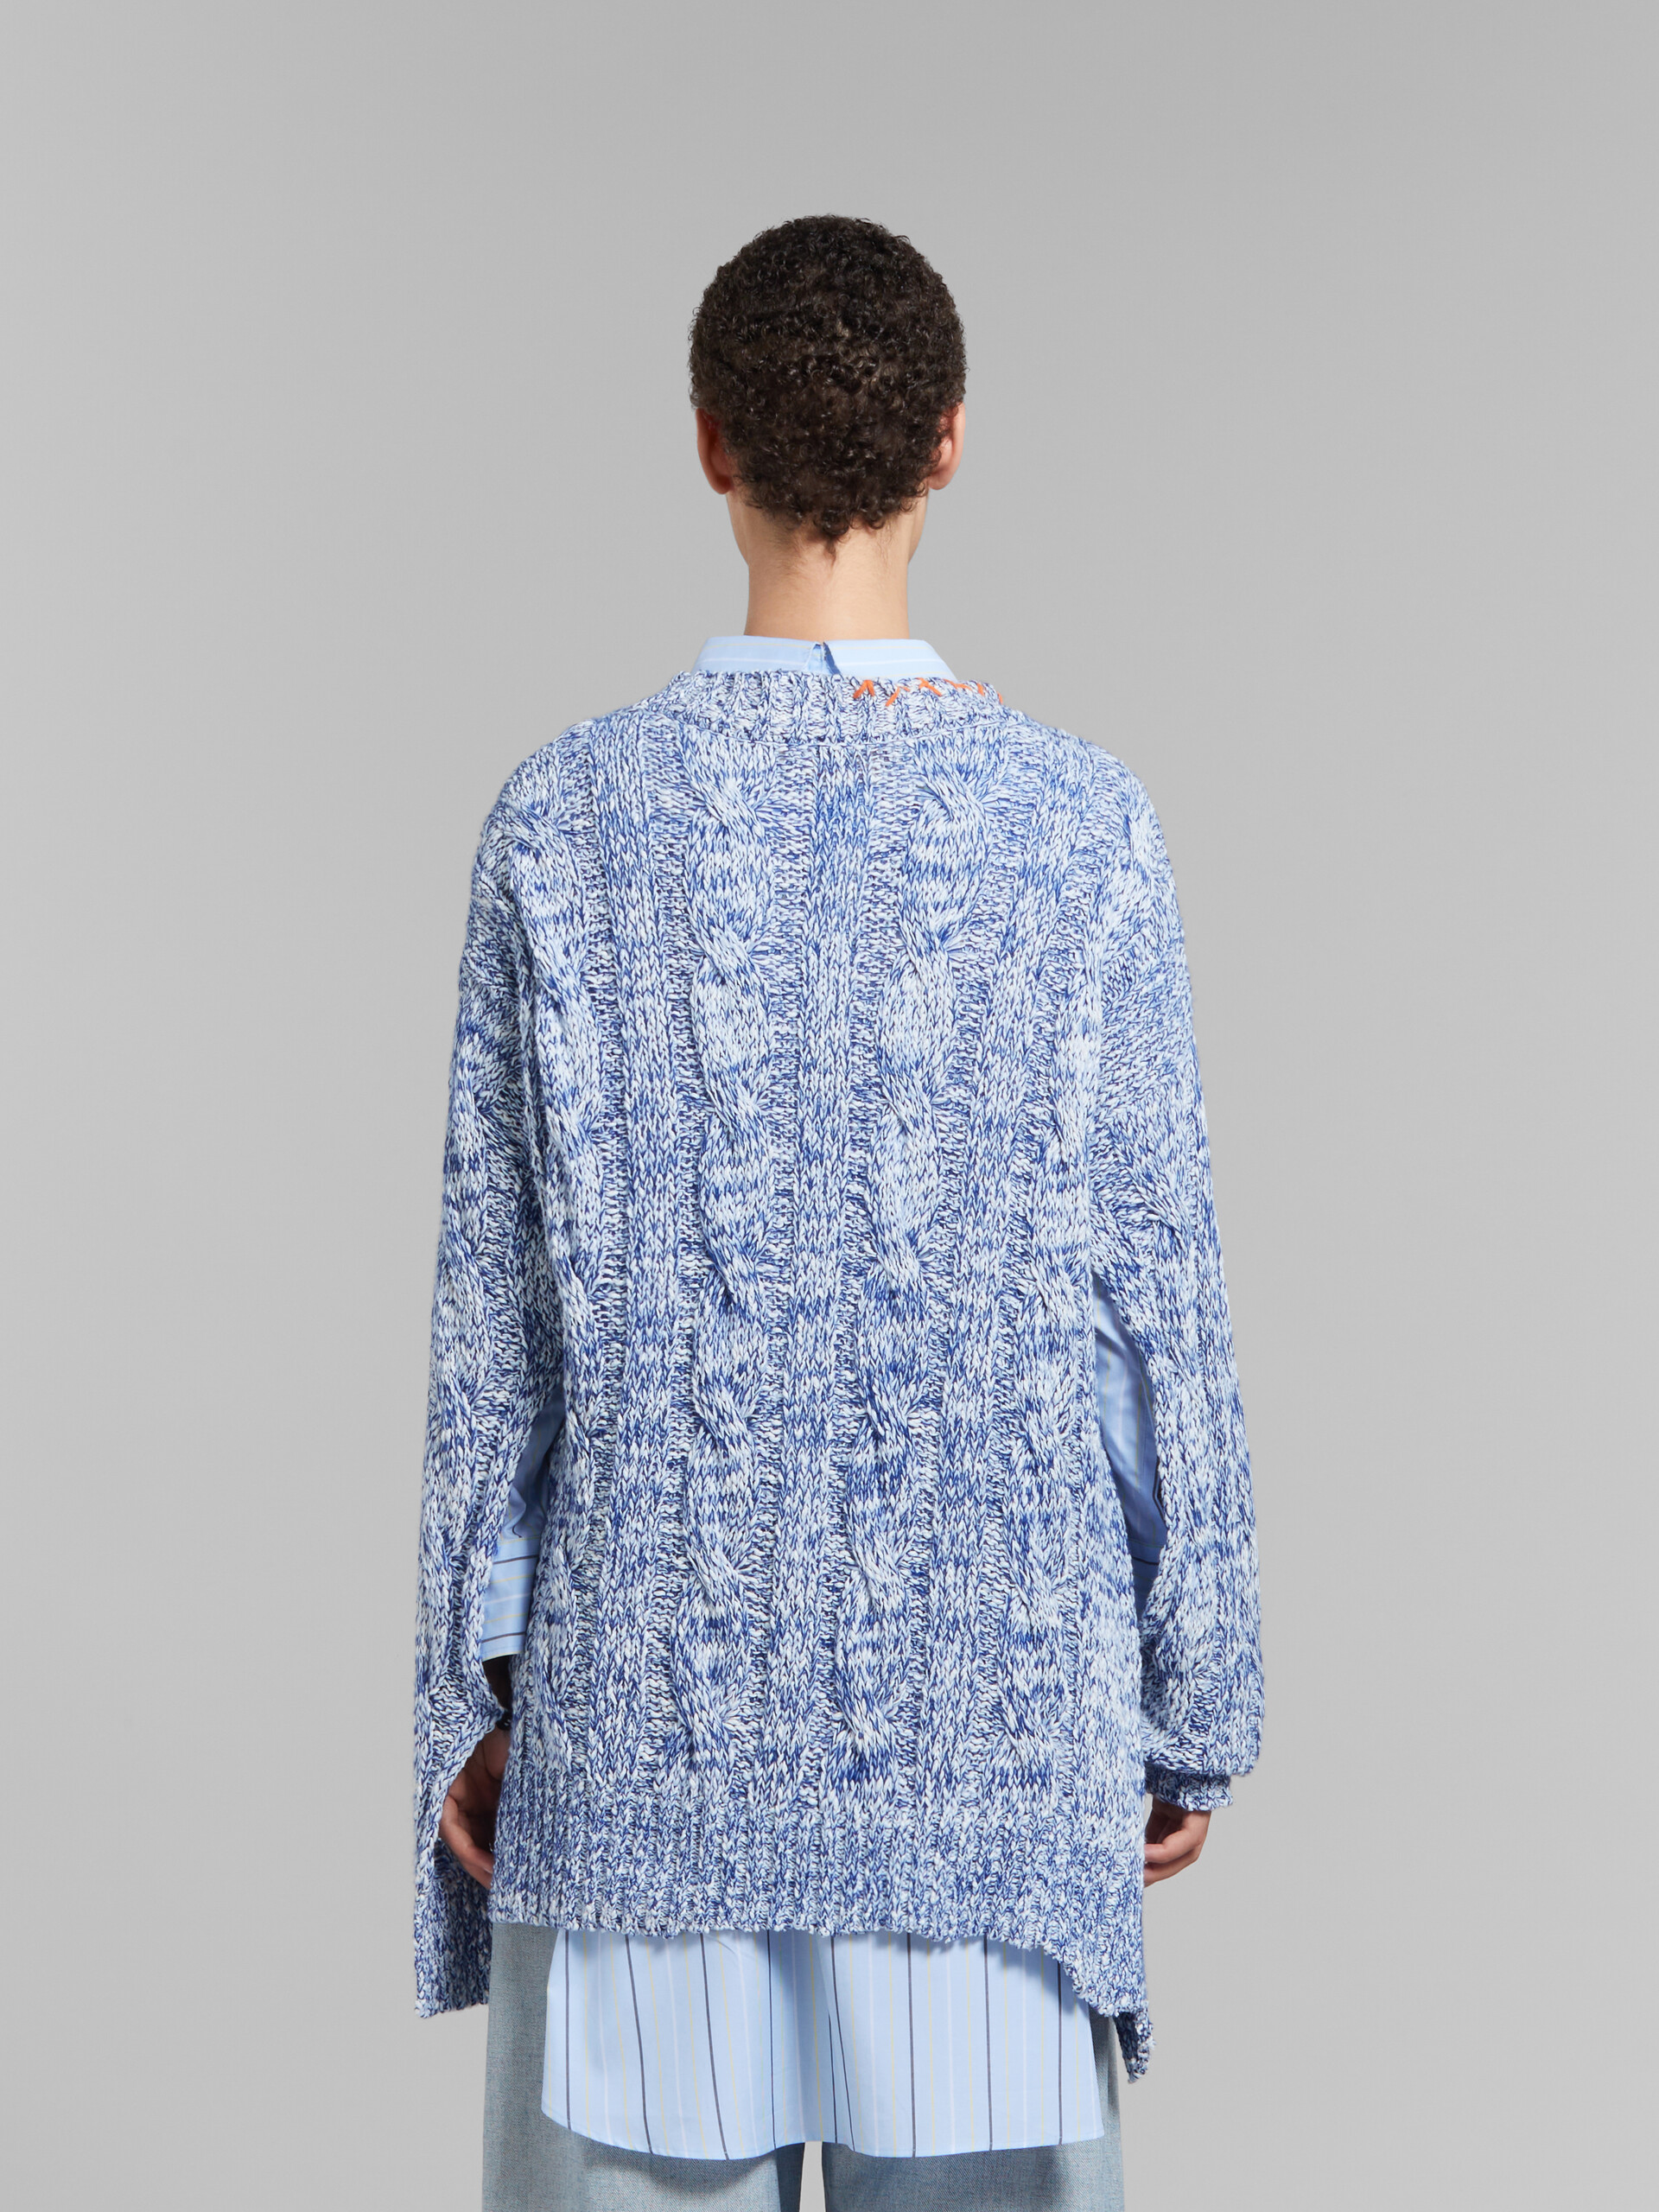 Jersey azul de mouliné con bordes deshilachados - jerseys - Image 3